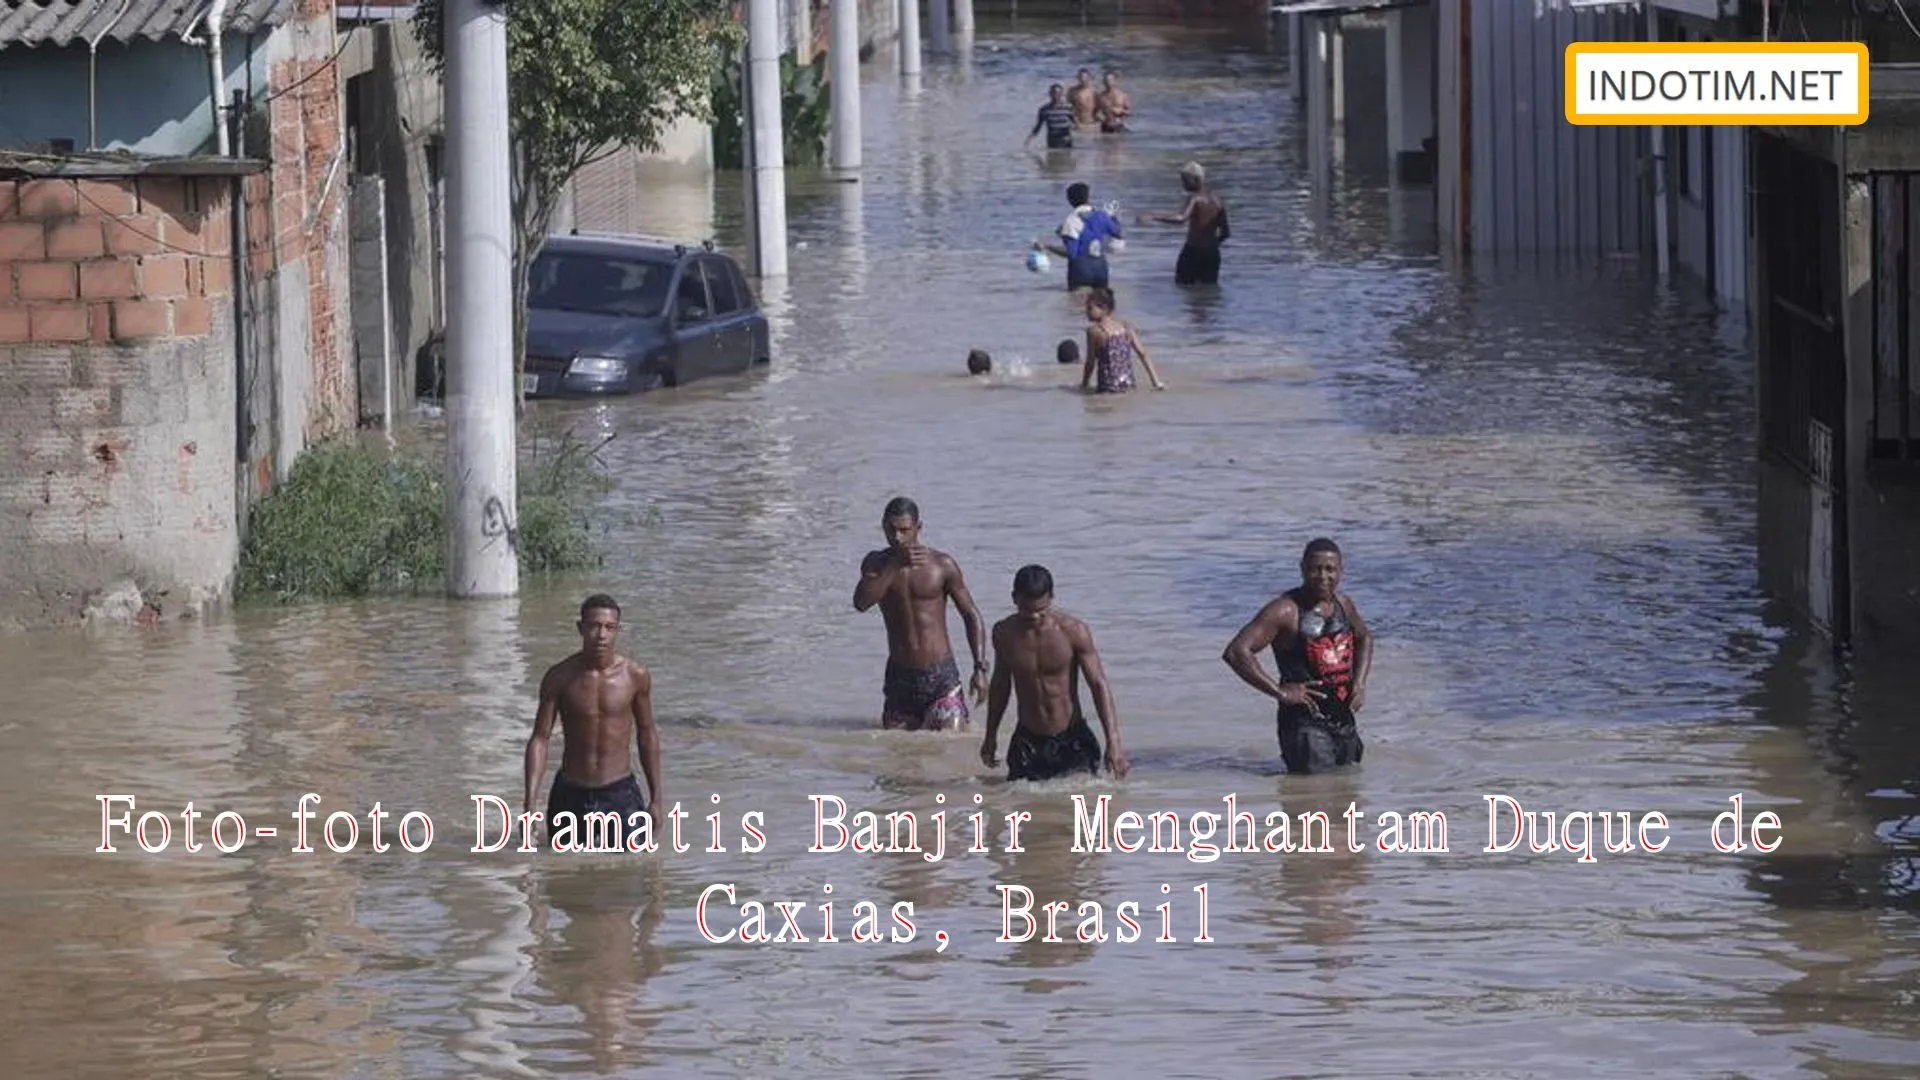 Foto-foto Dramatis Banjir Menghantam Duque de Caxias, Brasil